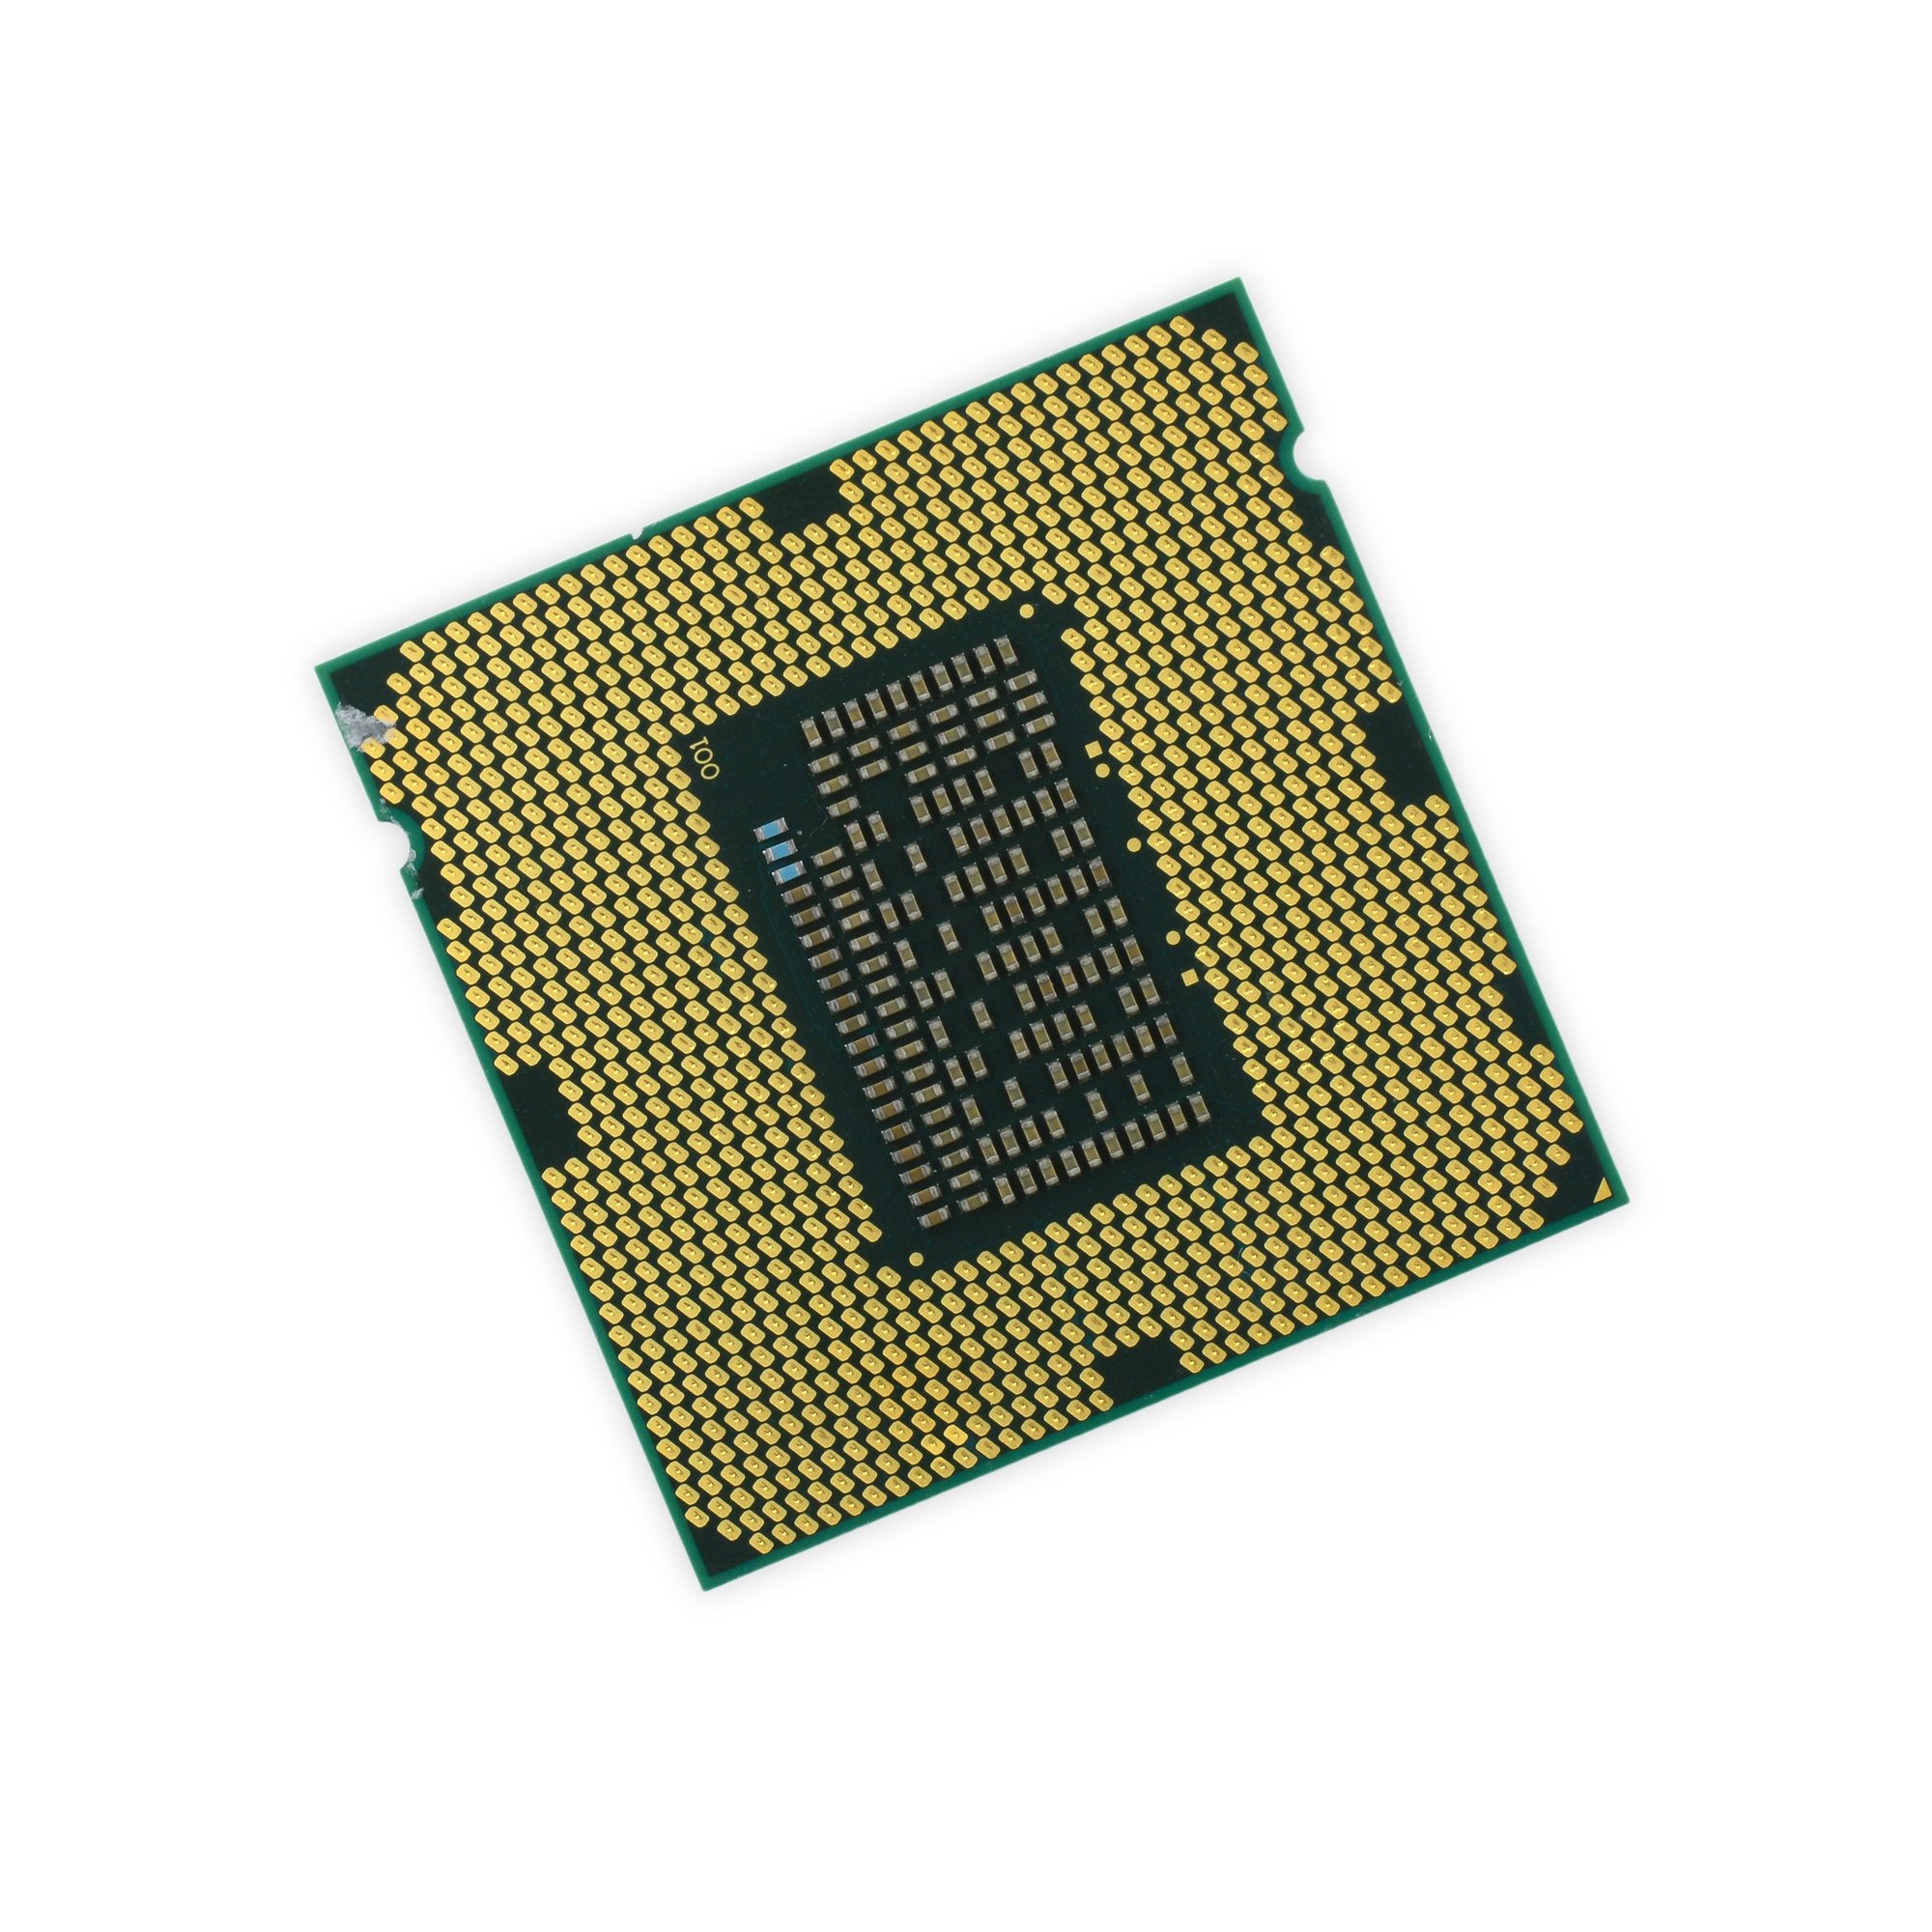 Intel i5-2400S Desktop CPU